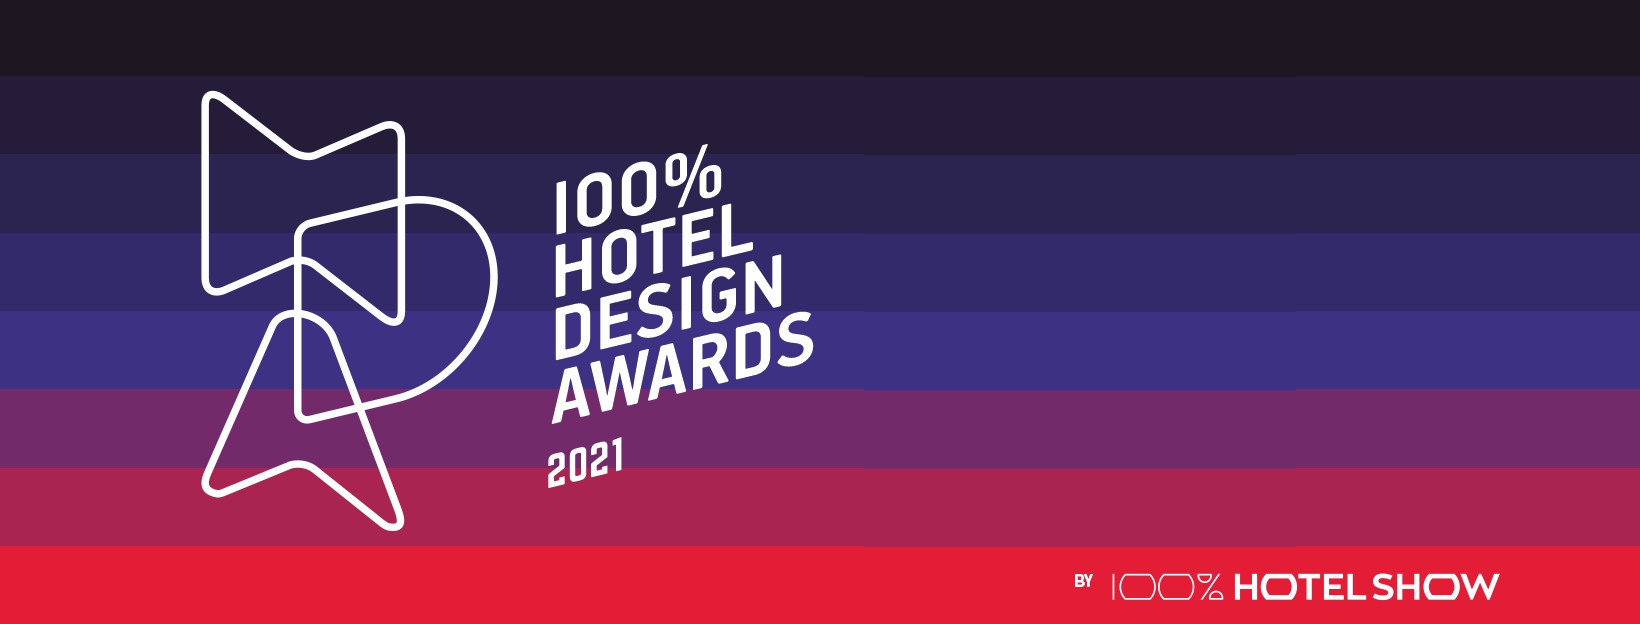 8th 100% Hotel Design Awards 2021